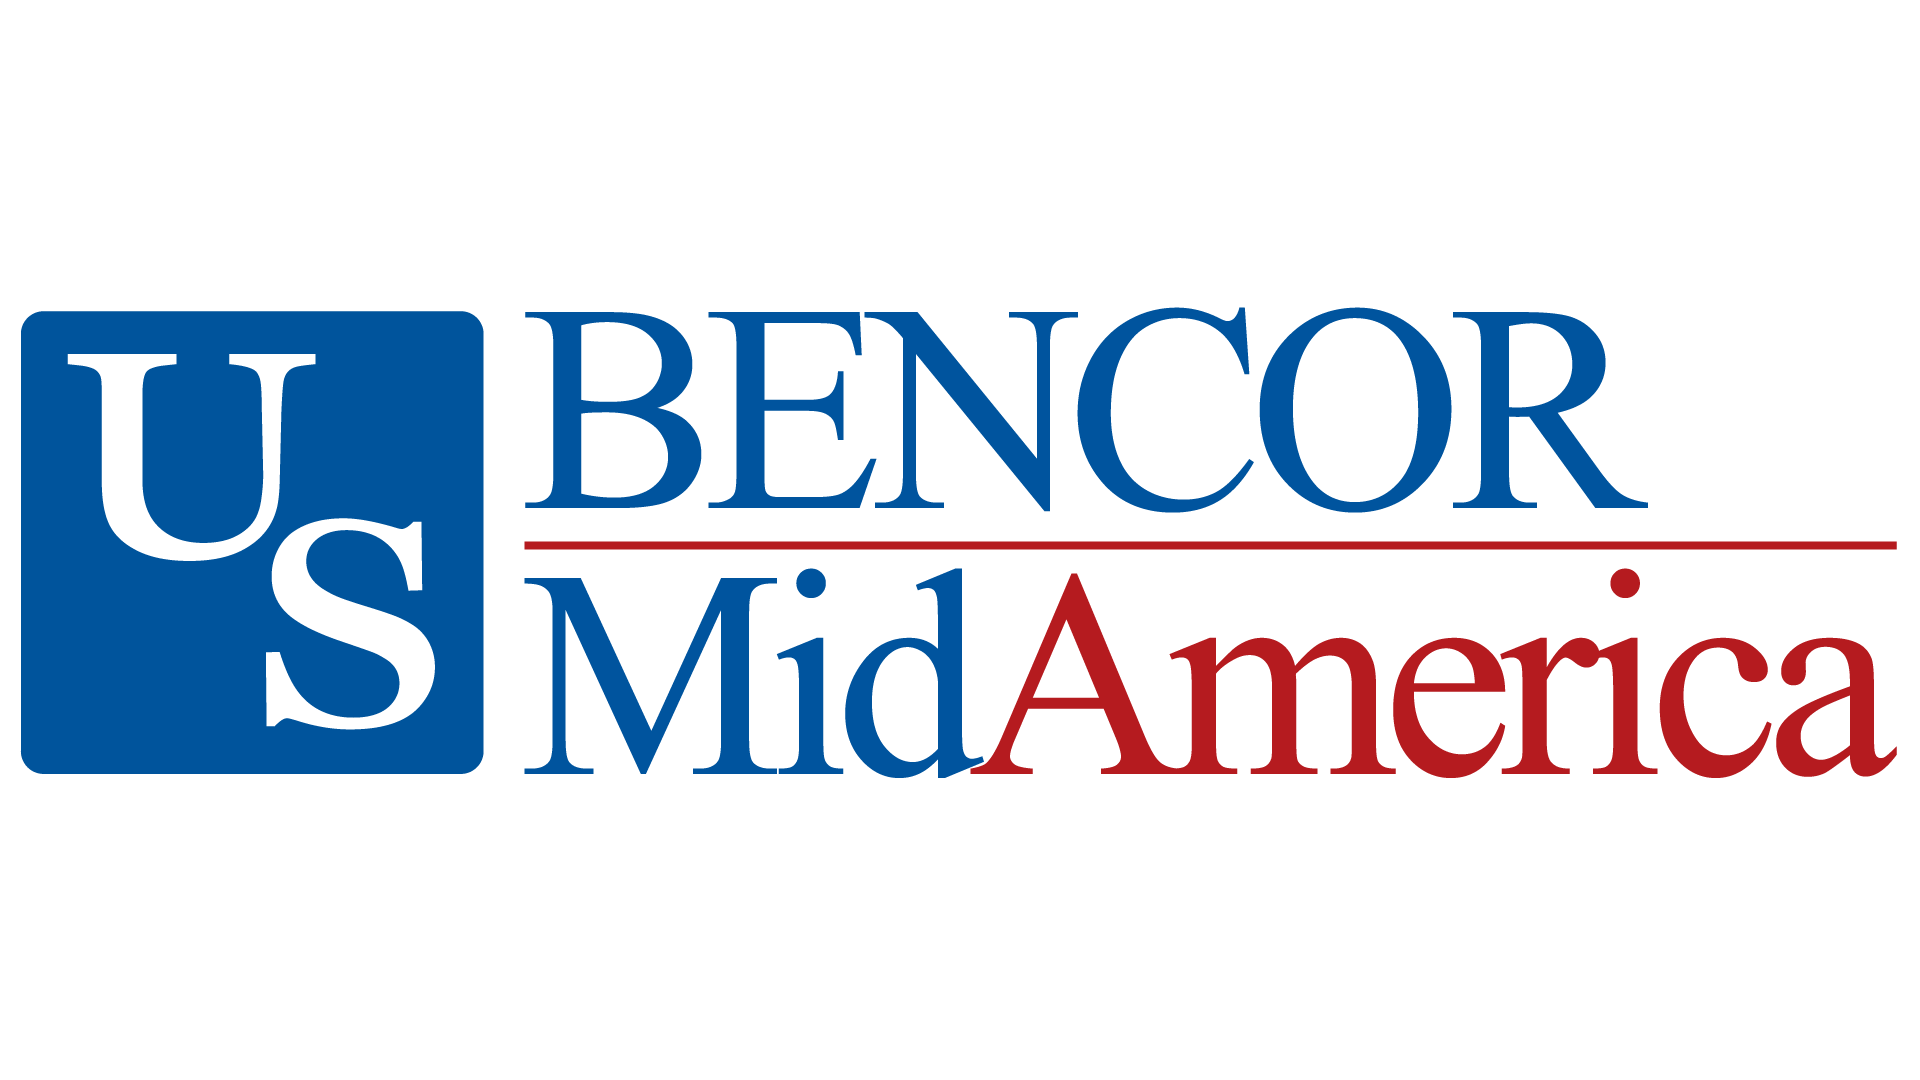 BENCOR U.S. Employee Benefits Services Group